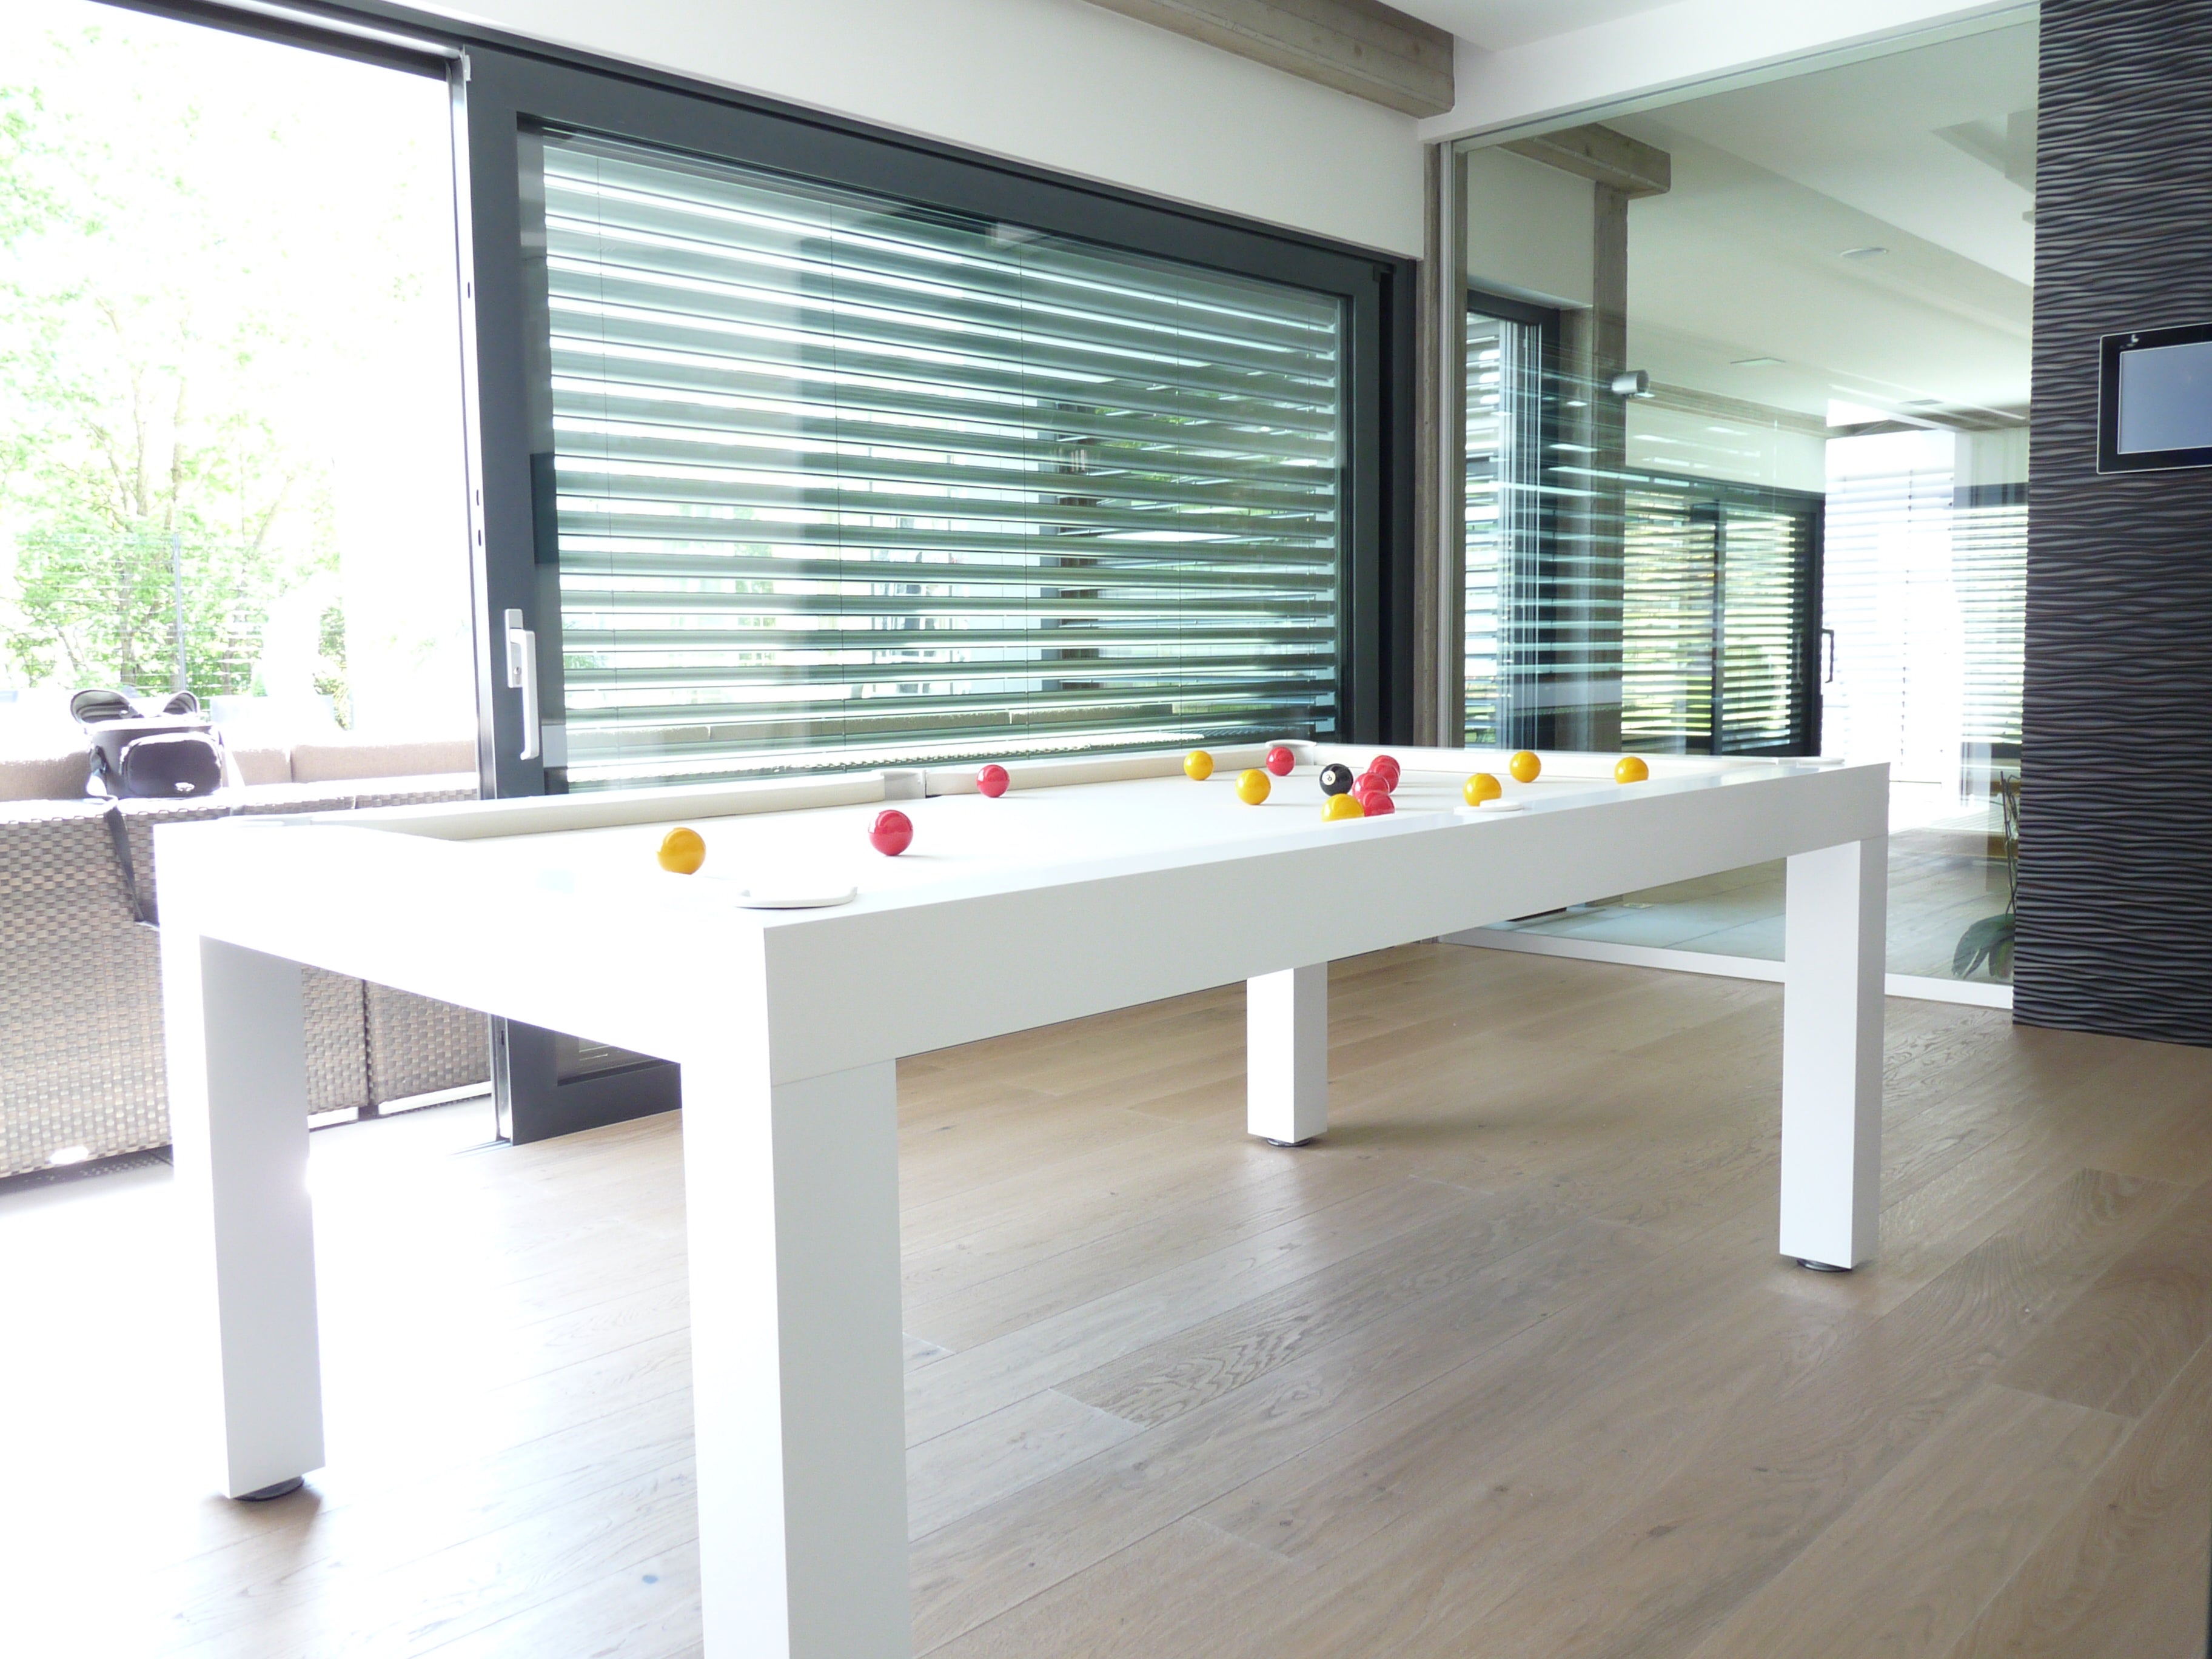 Classic Billiard Table, Customizable Made in France - Billards Toulet